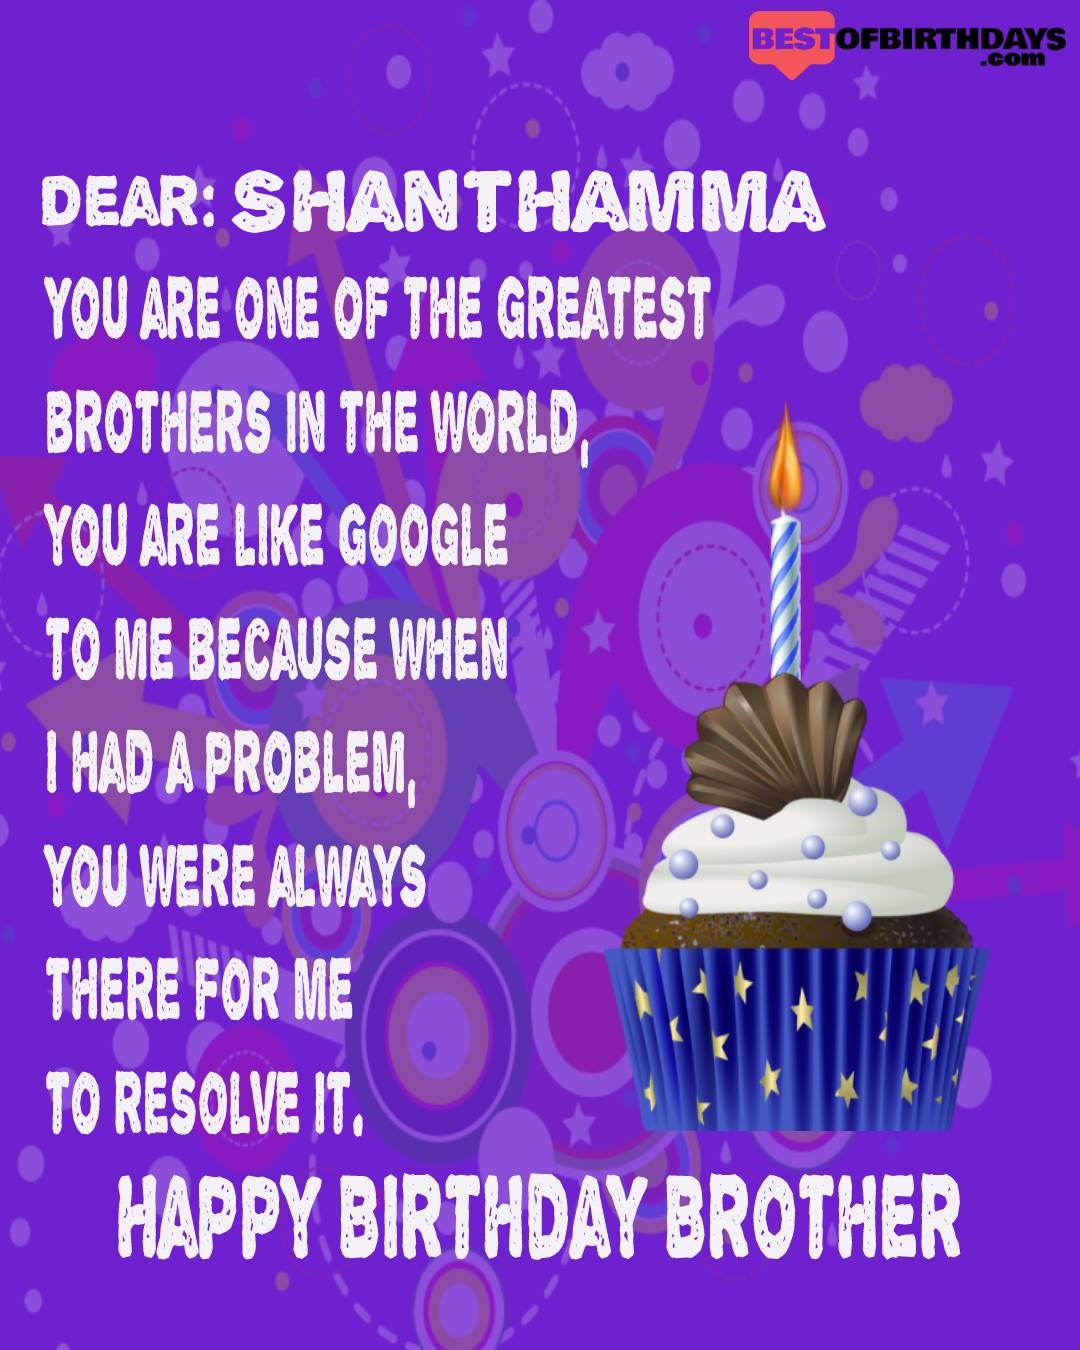 Happy birthday shanthamma bhai brother bro